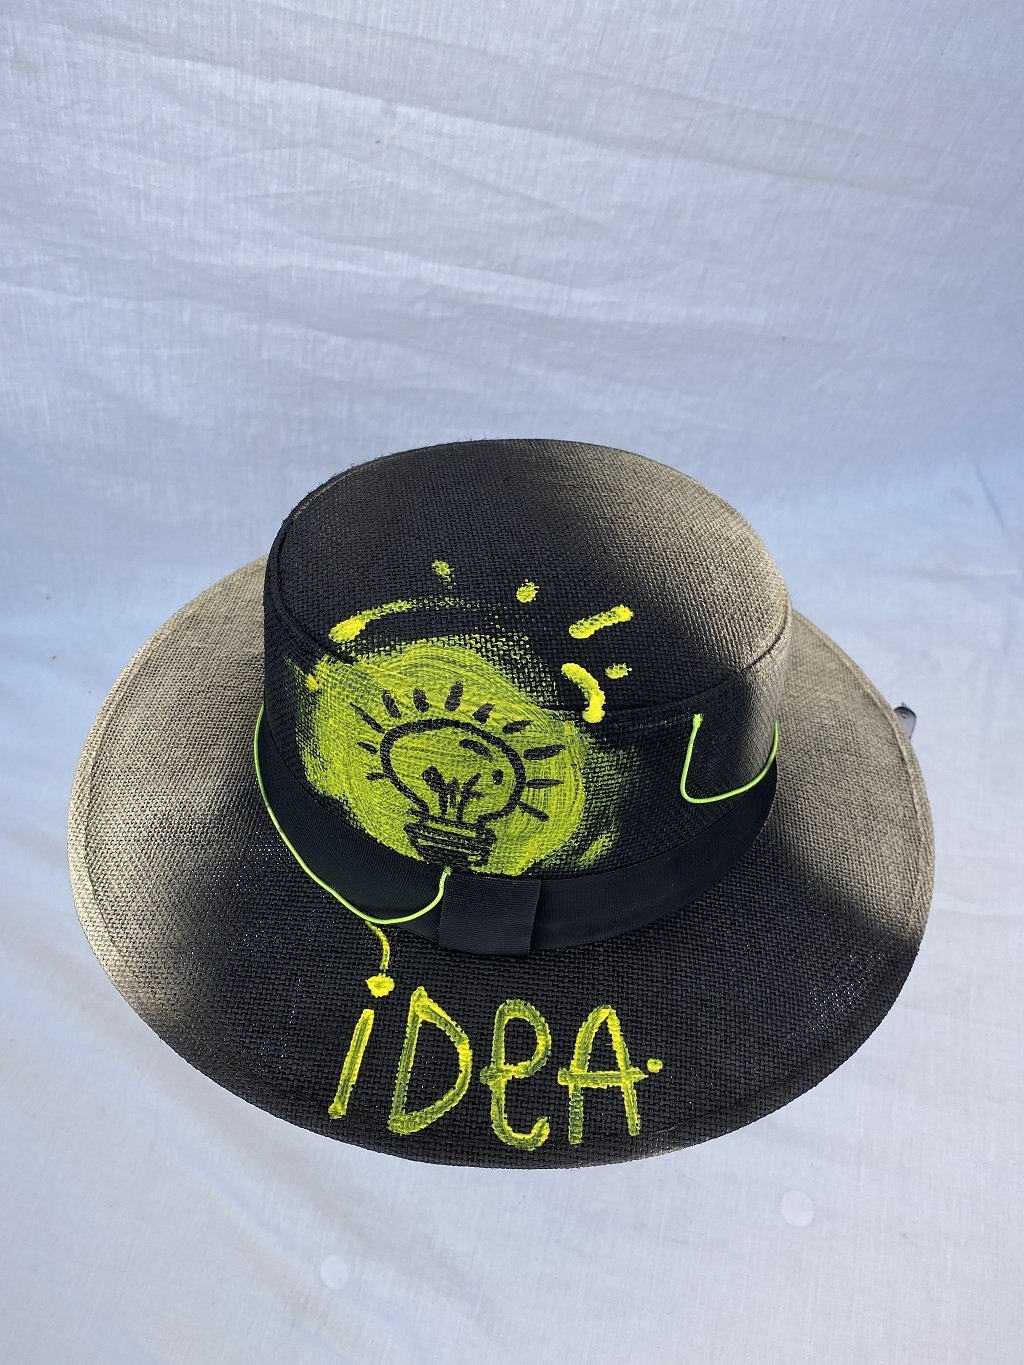 Customized Hat "Idea", Designer's Own Design, Handmade By Artisan.